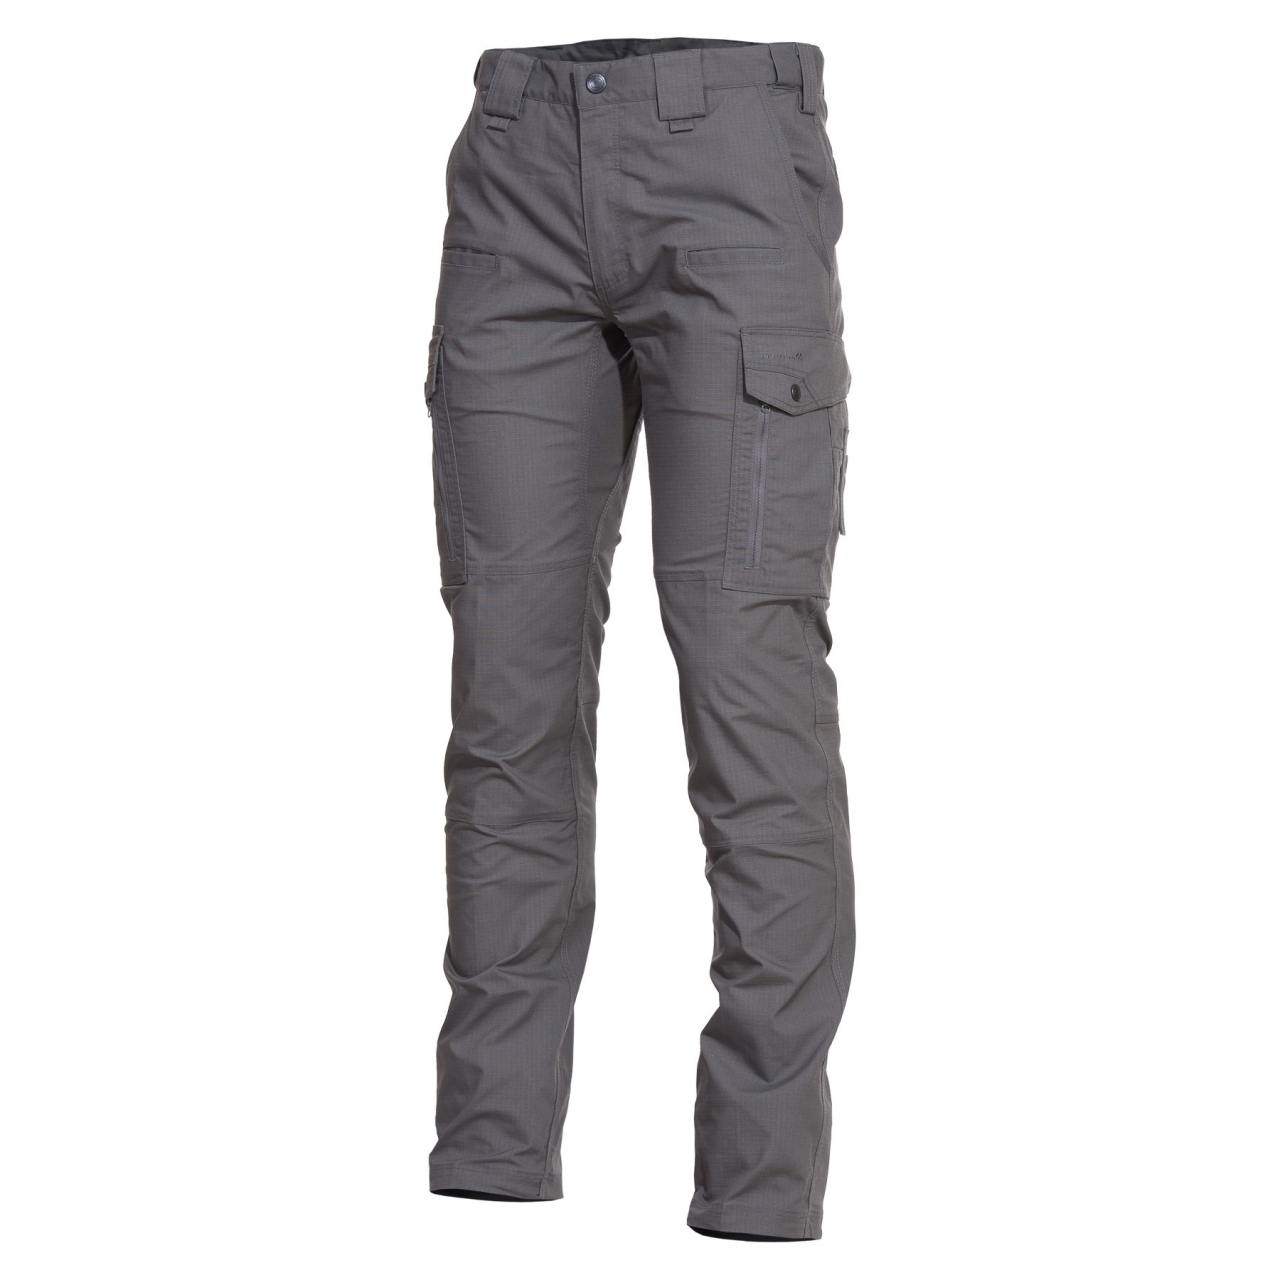 Kalhoty Pentagon Ranger 2.0 - šedé, 46 L